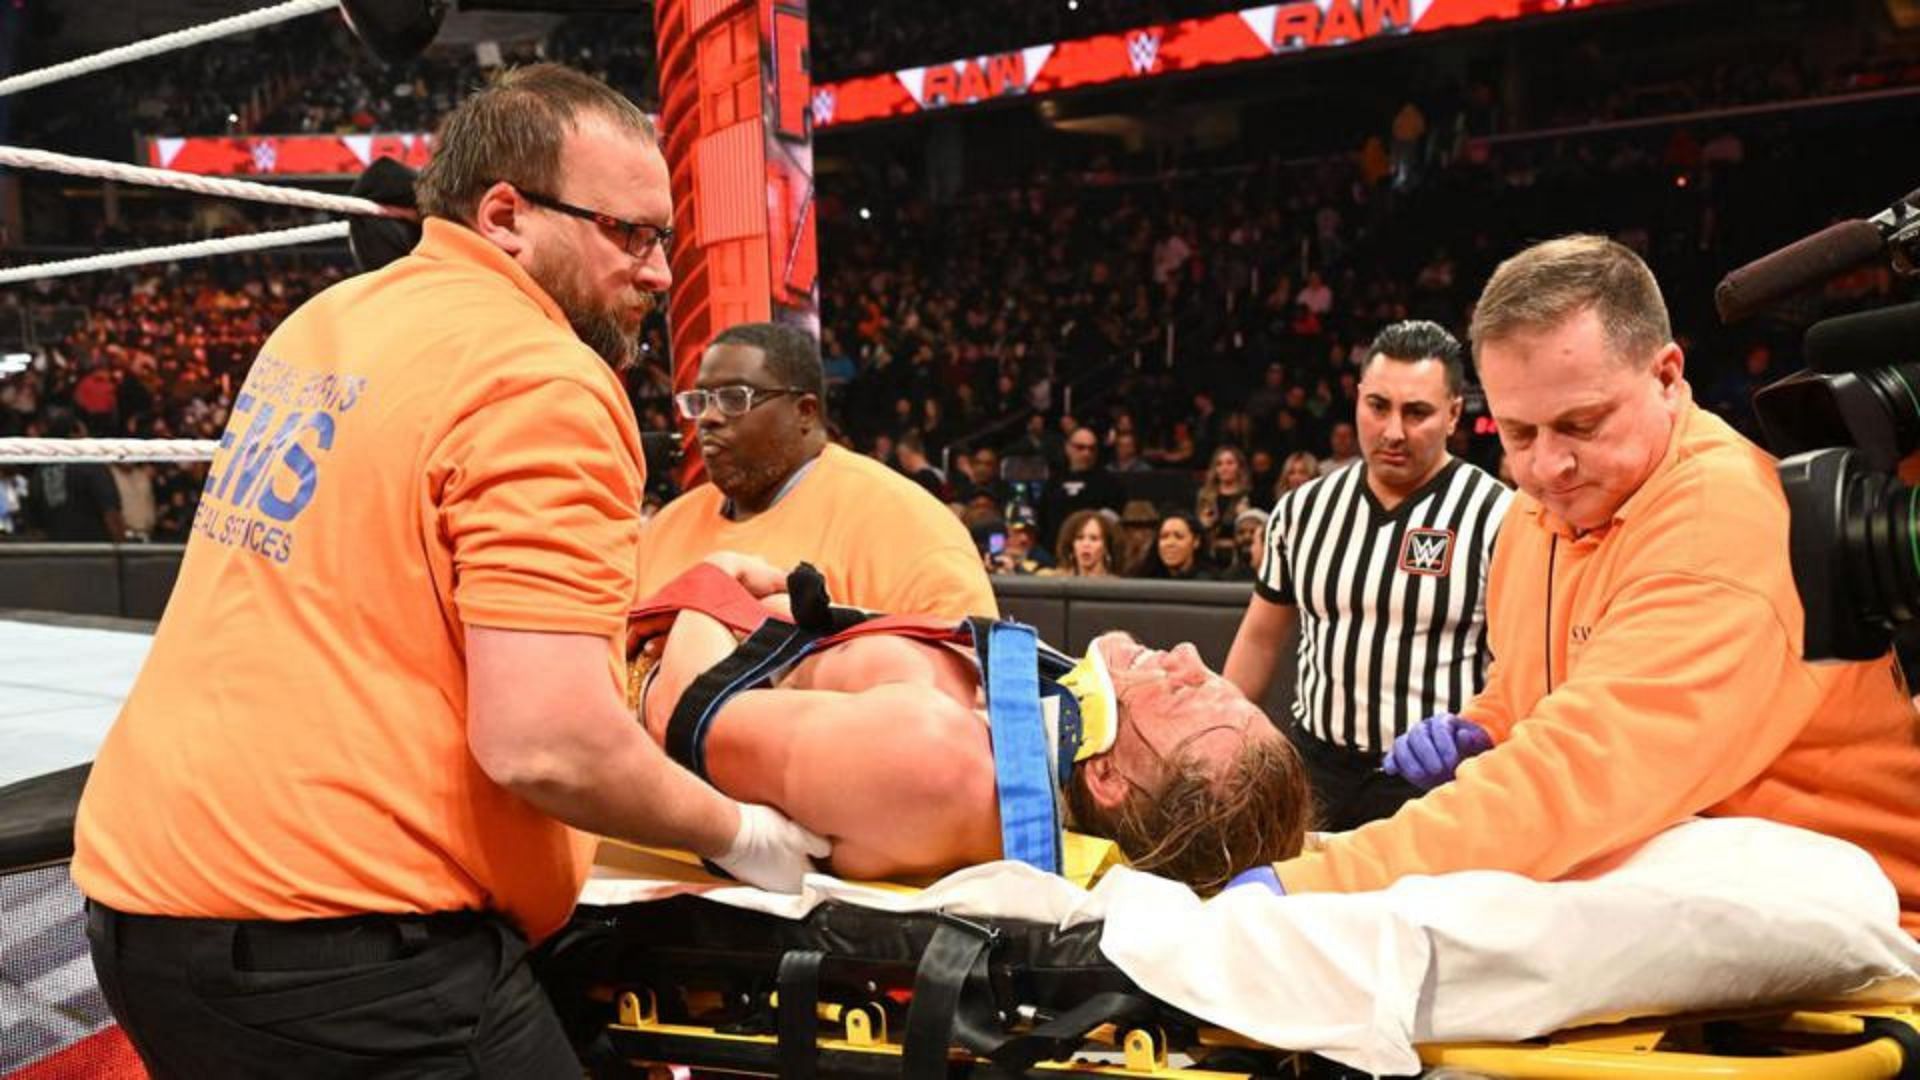 WWE Superstar Matt Riddle might return to action soon